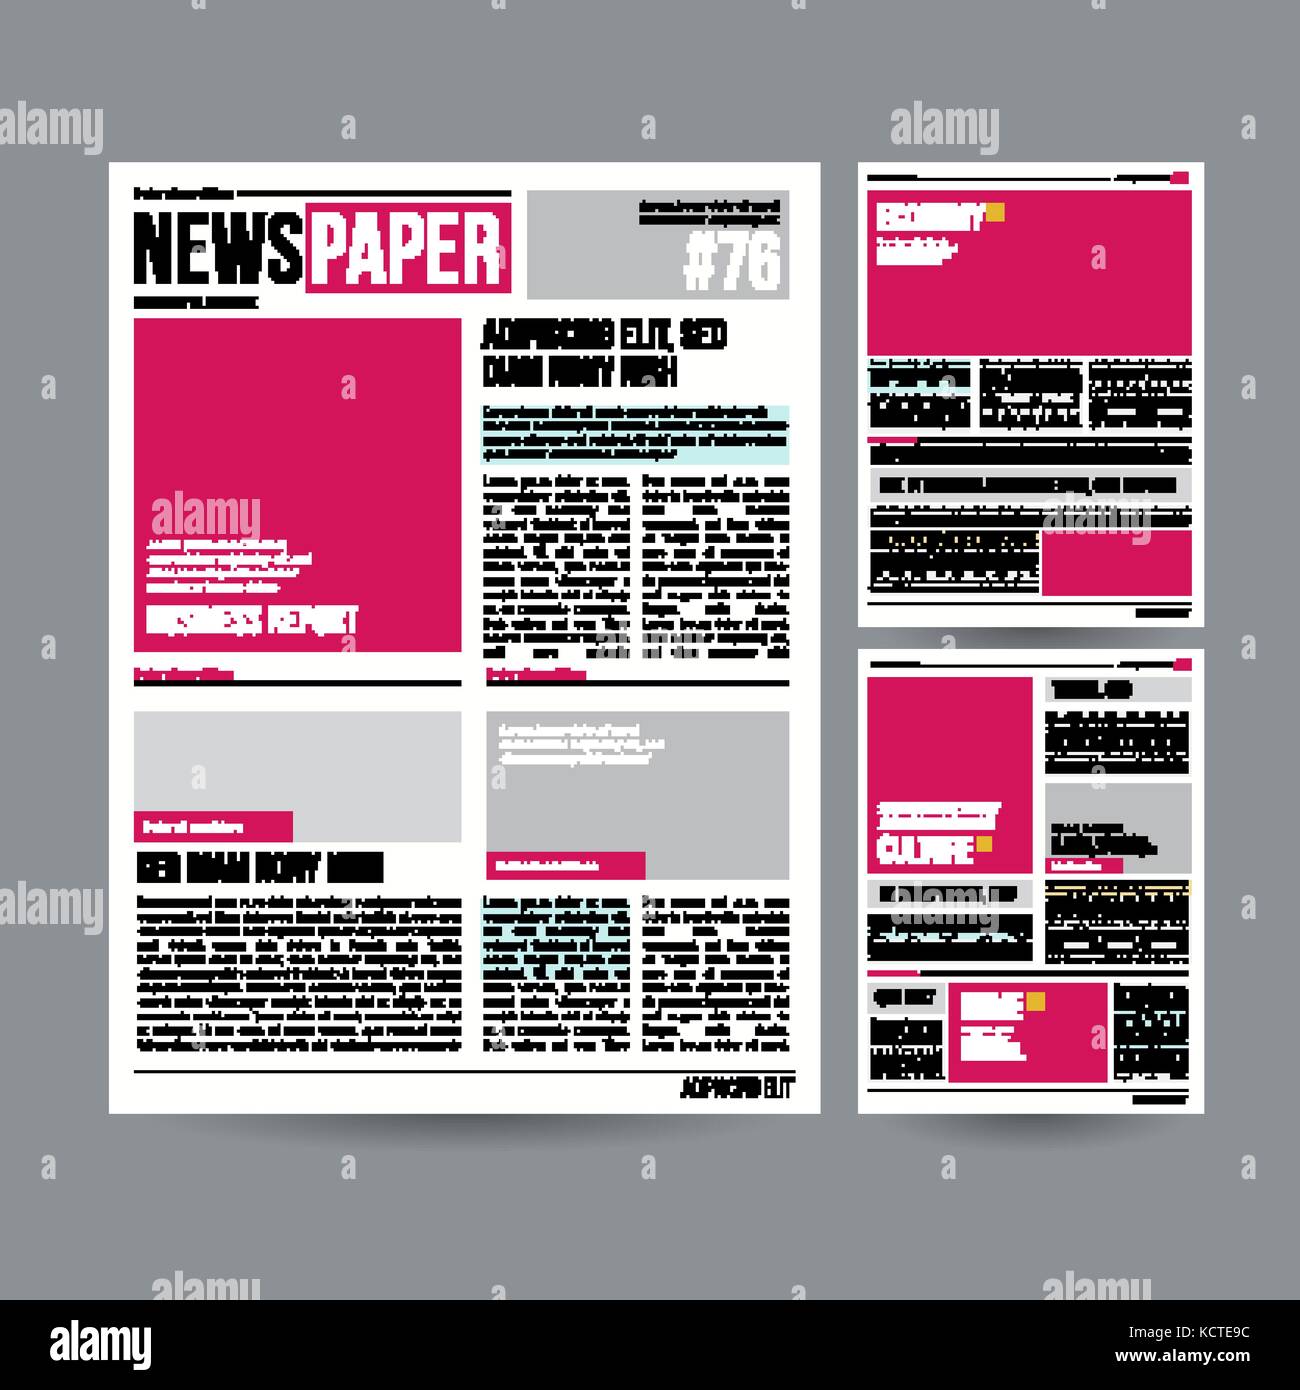 Tabloid Newspaper Layout Design